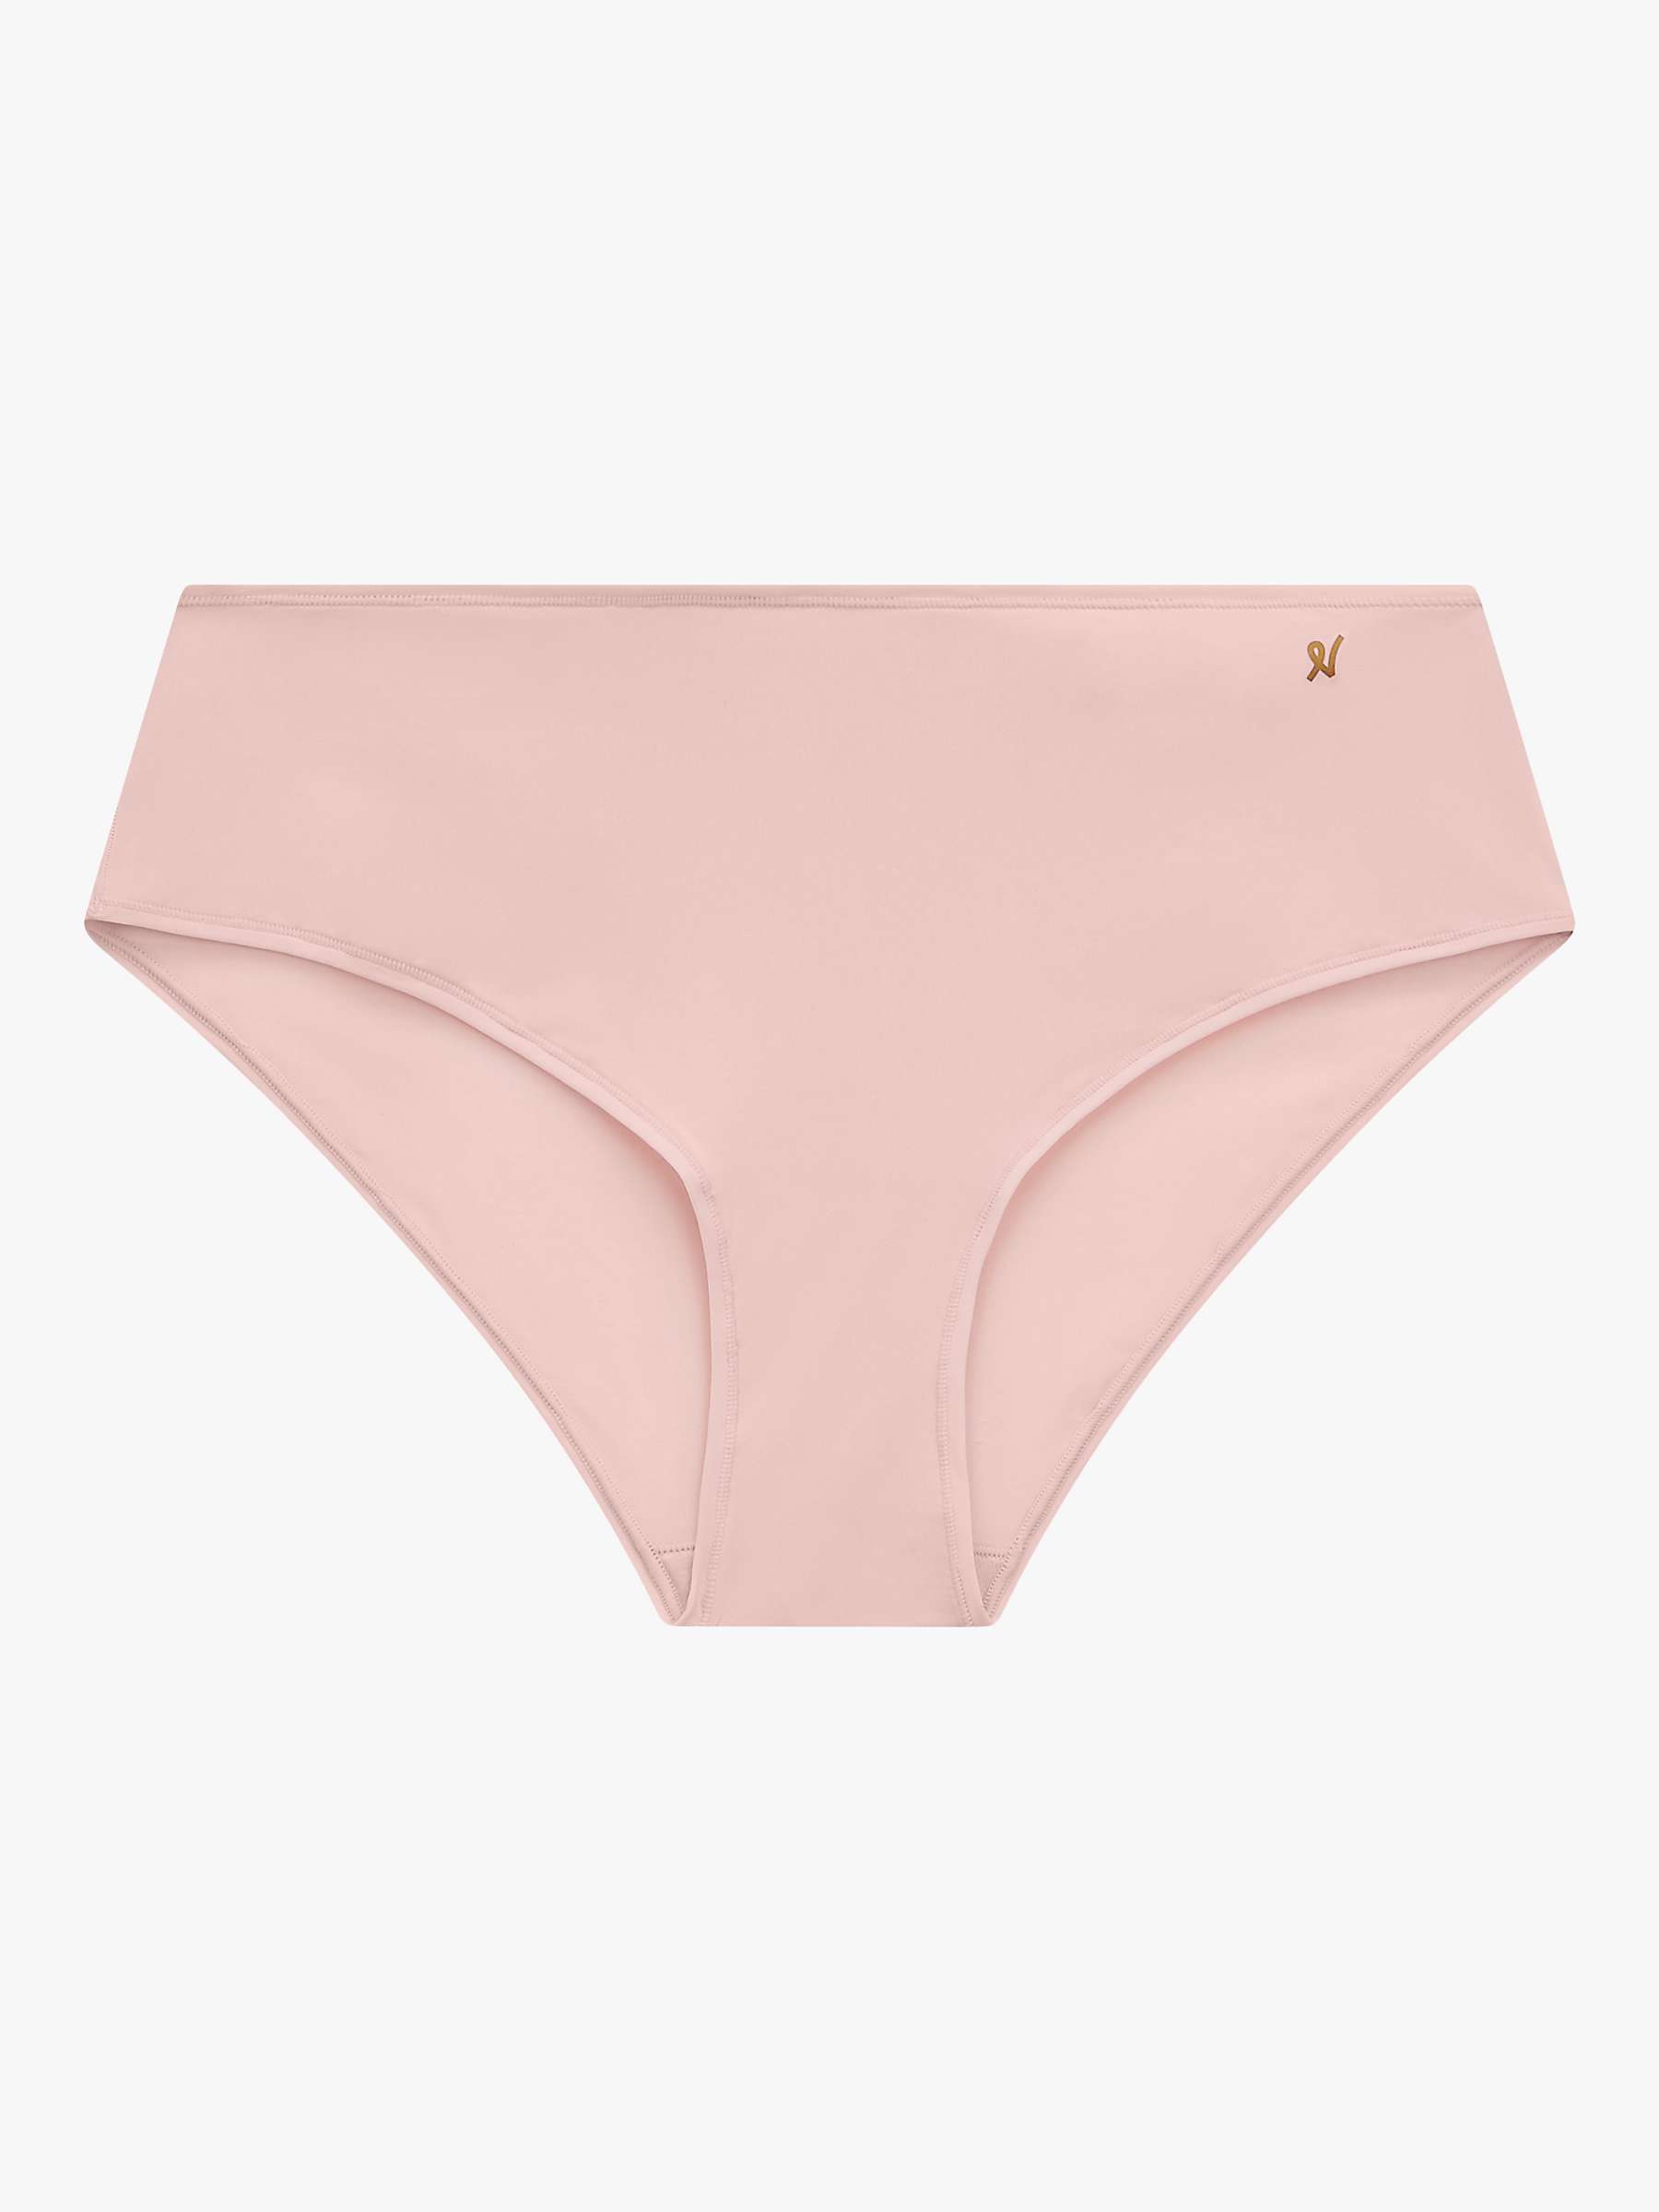 Nudea Mid Rise Bikini Knickers, Blush Pink at John Lewis & Partners